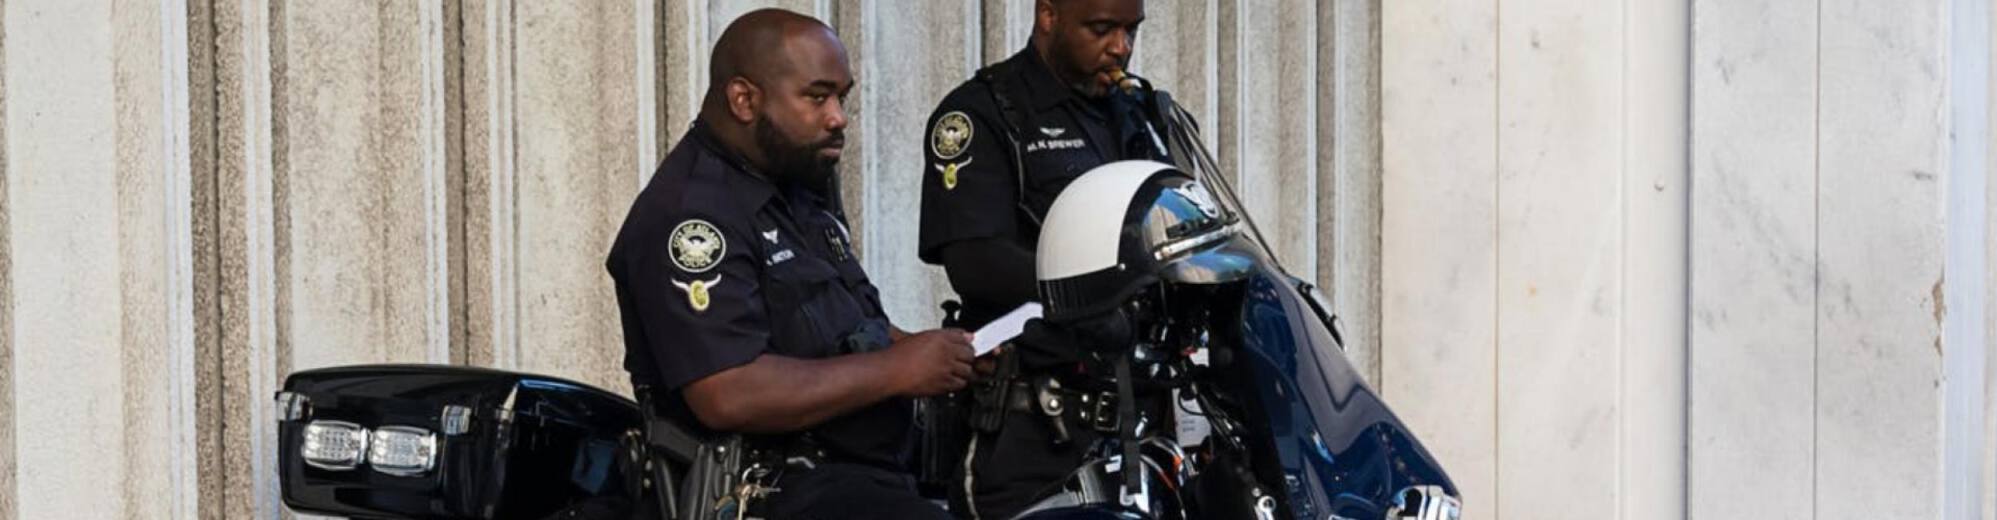 Police Officer Cover Letter: Samples for Law Enforcement Jobs